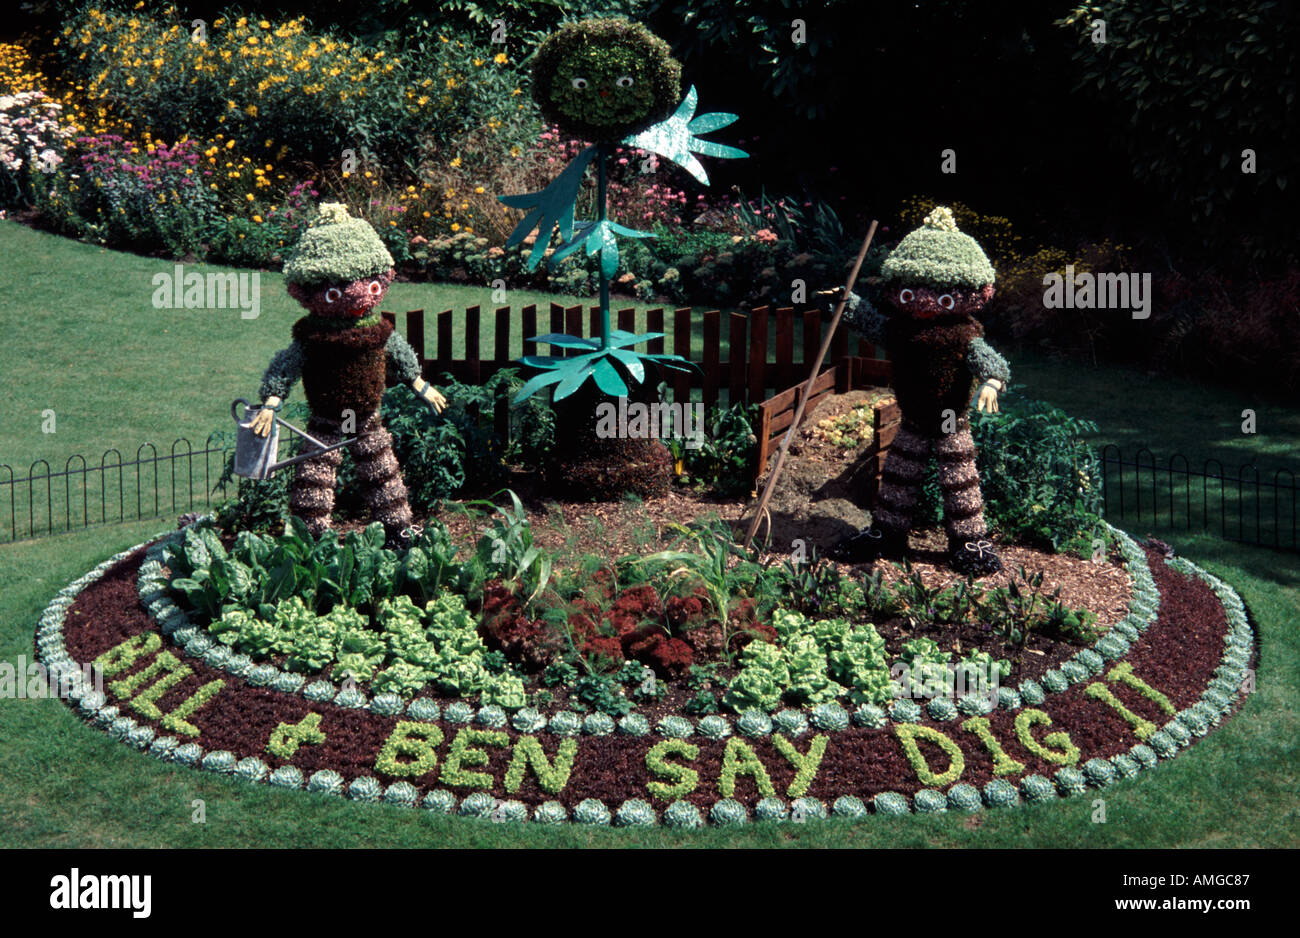 Bill et Ben the flowerpot men - affichage floral Jardins Parade Bath Spa, Somerset, UK Banque D'Images